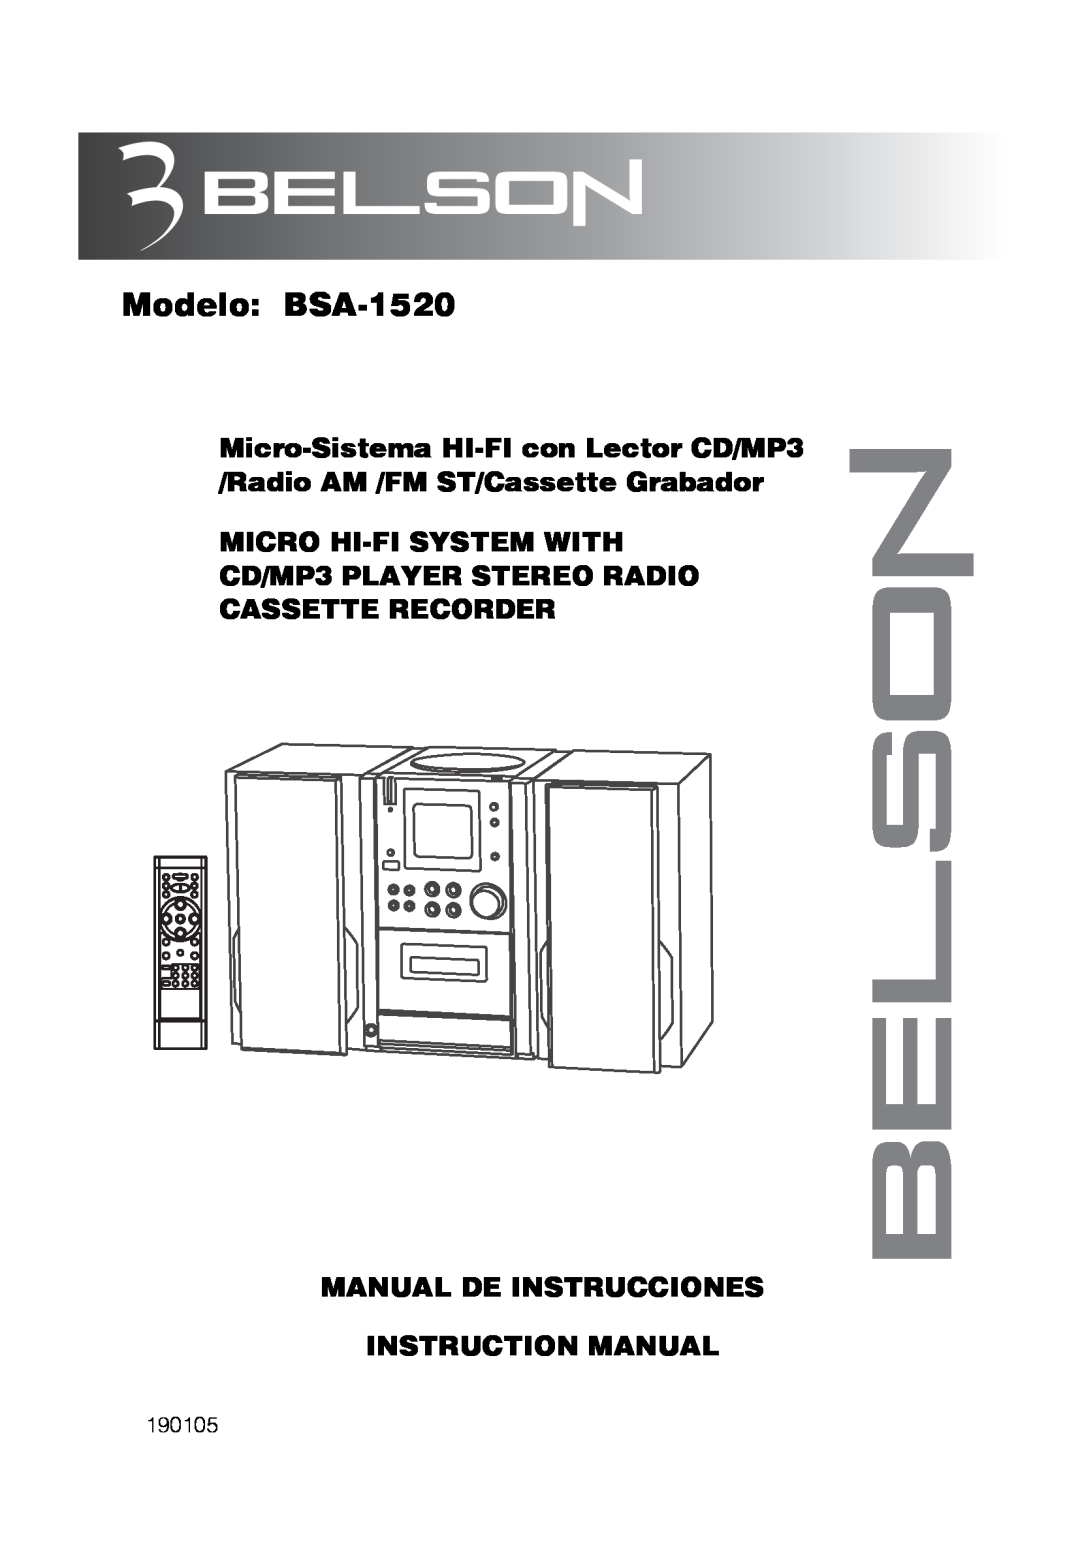 Motorola instruction manual 190105, Modelo BSA-1520, MICRO HI-FISYSTEM WITH CD/MP3 PLAYER STEREO RADIO 